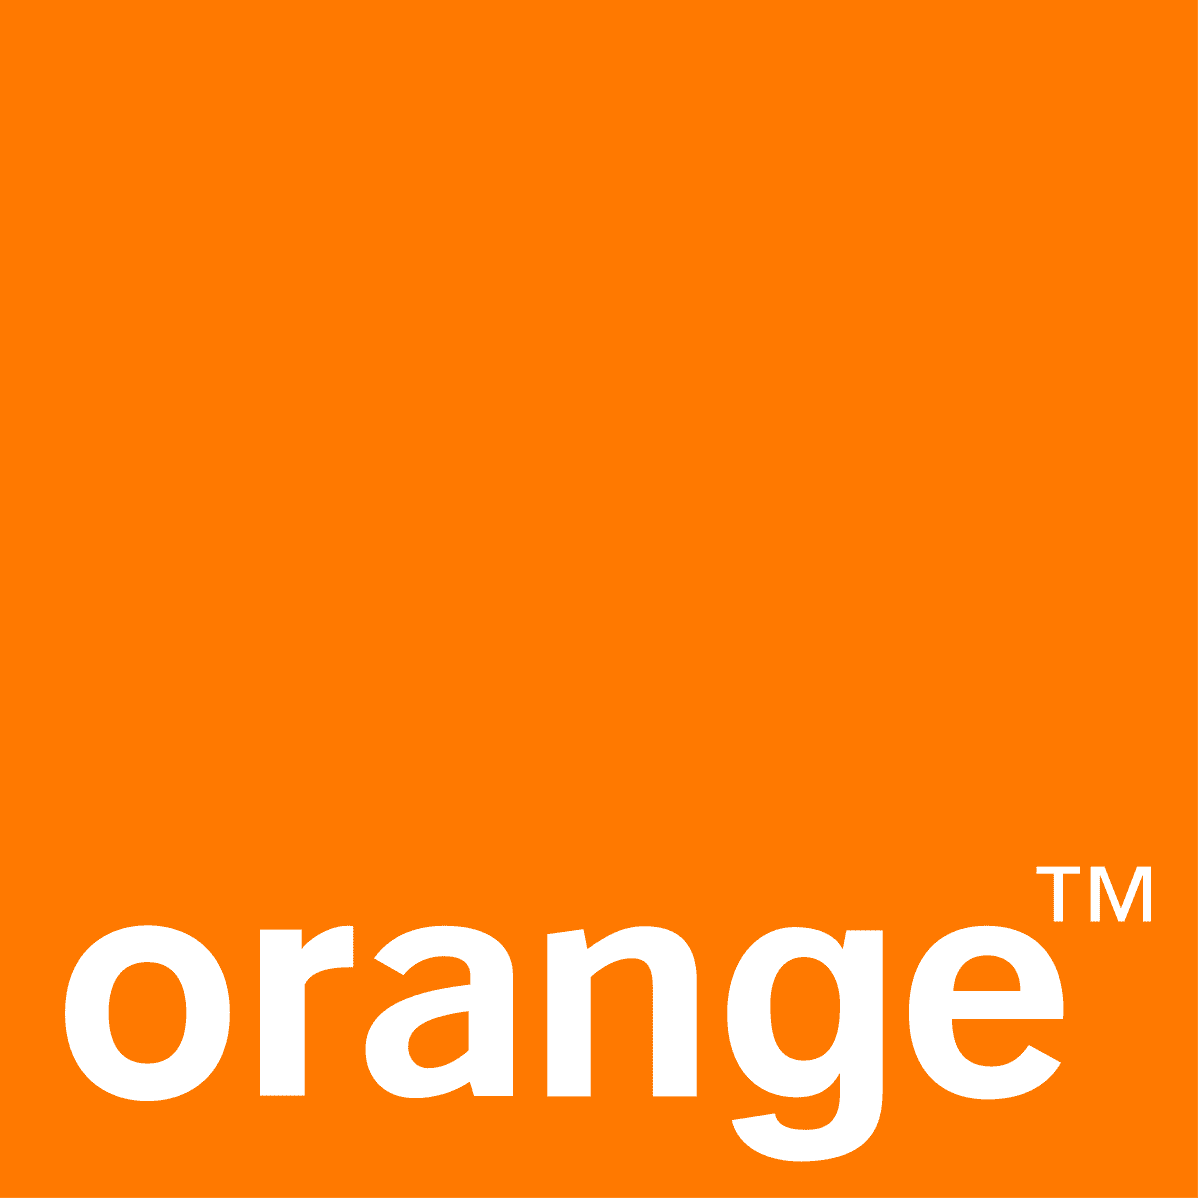 What Is An Orange eSIM